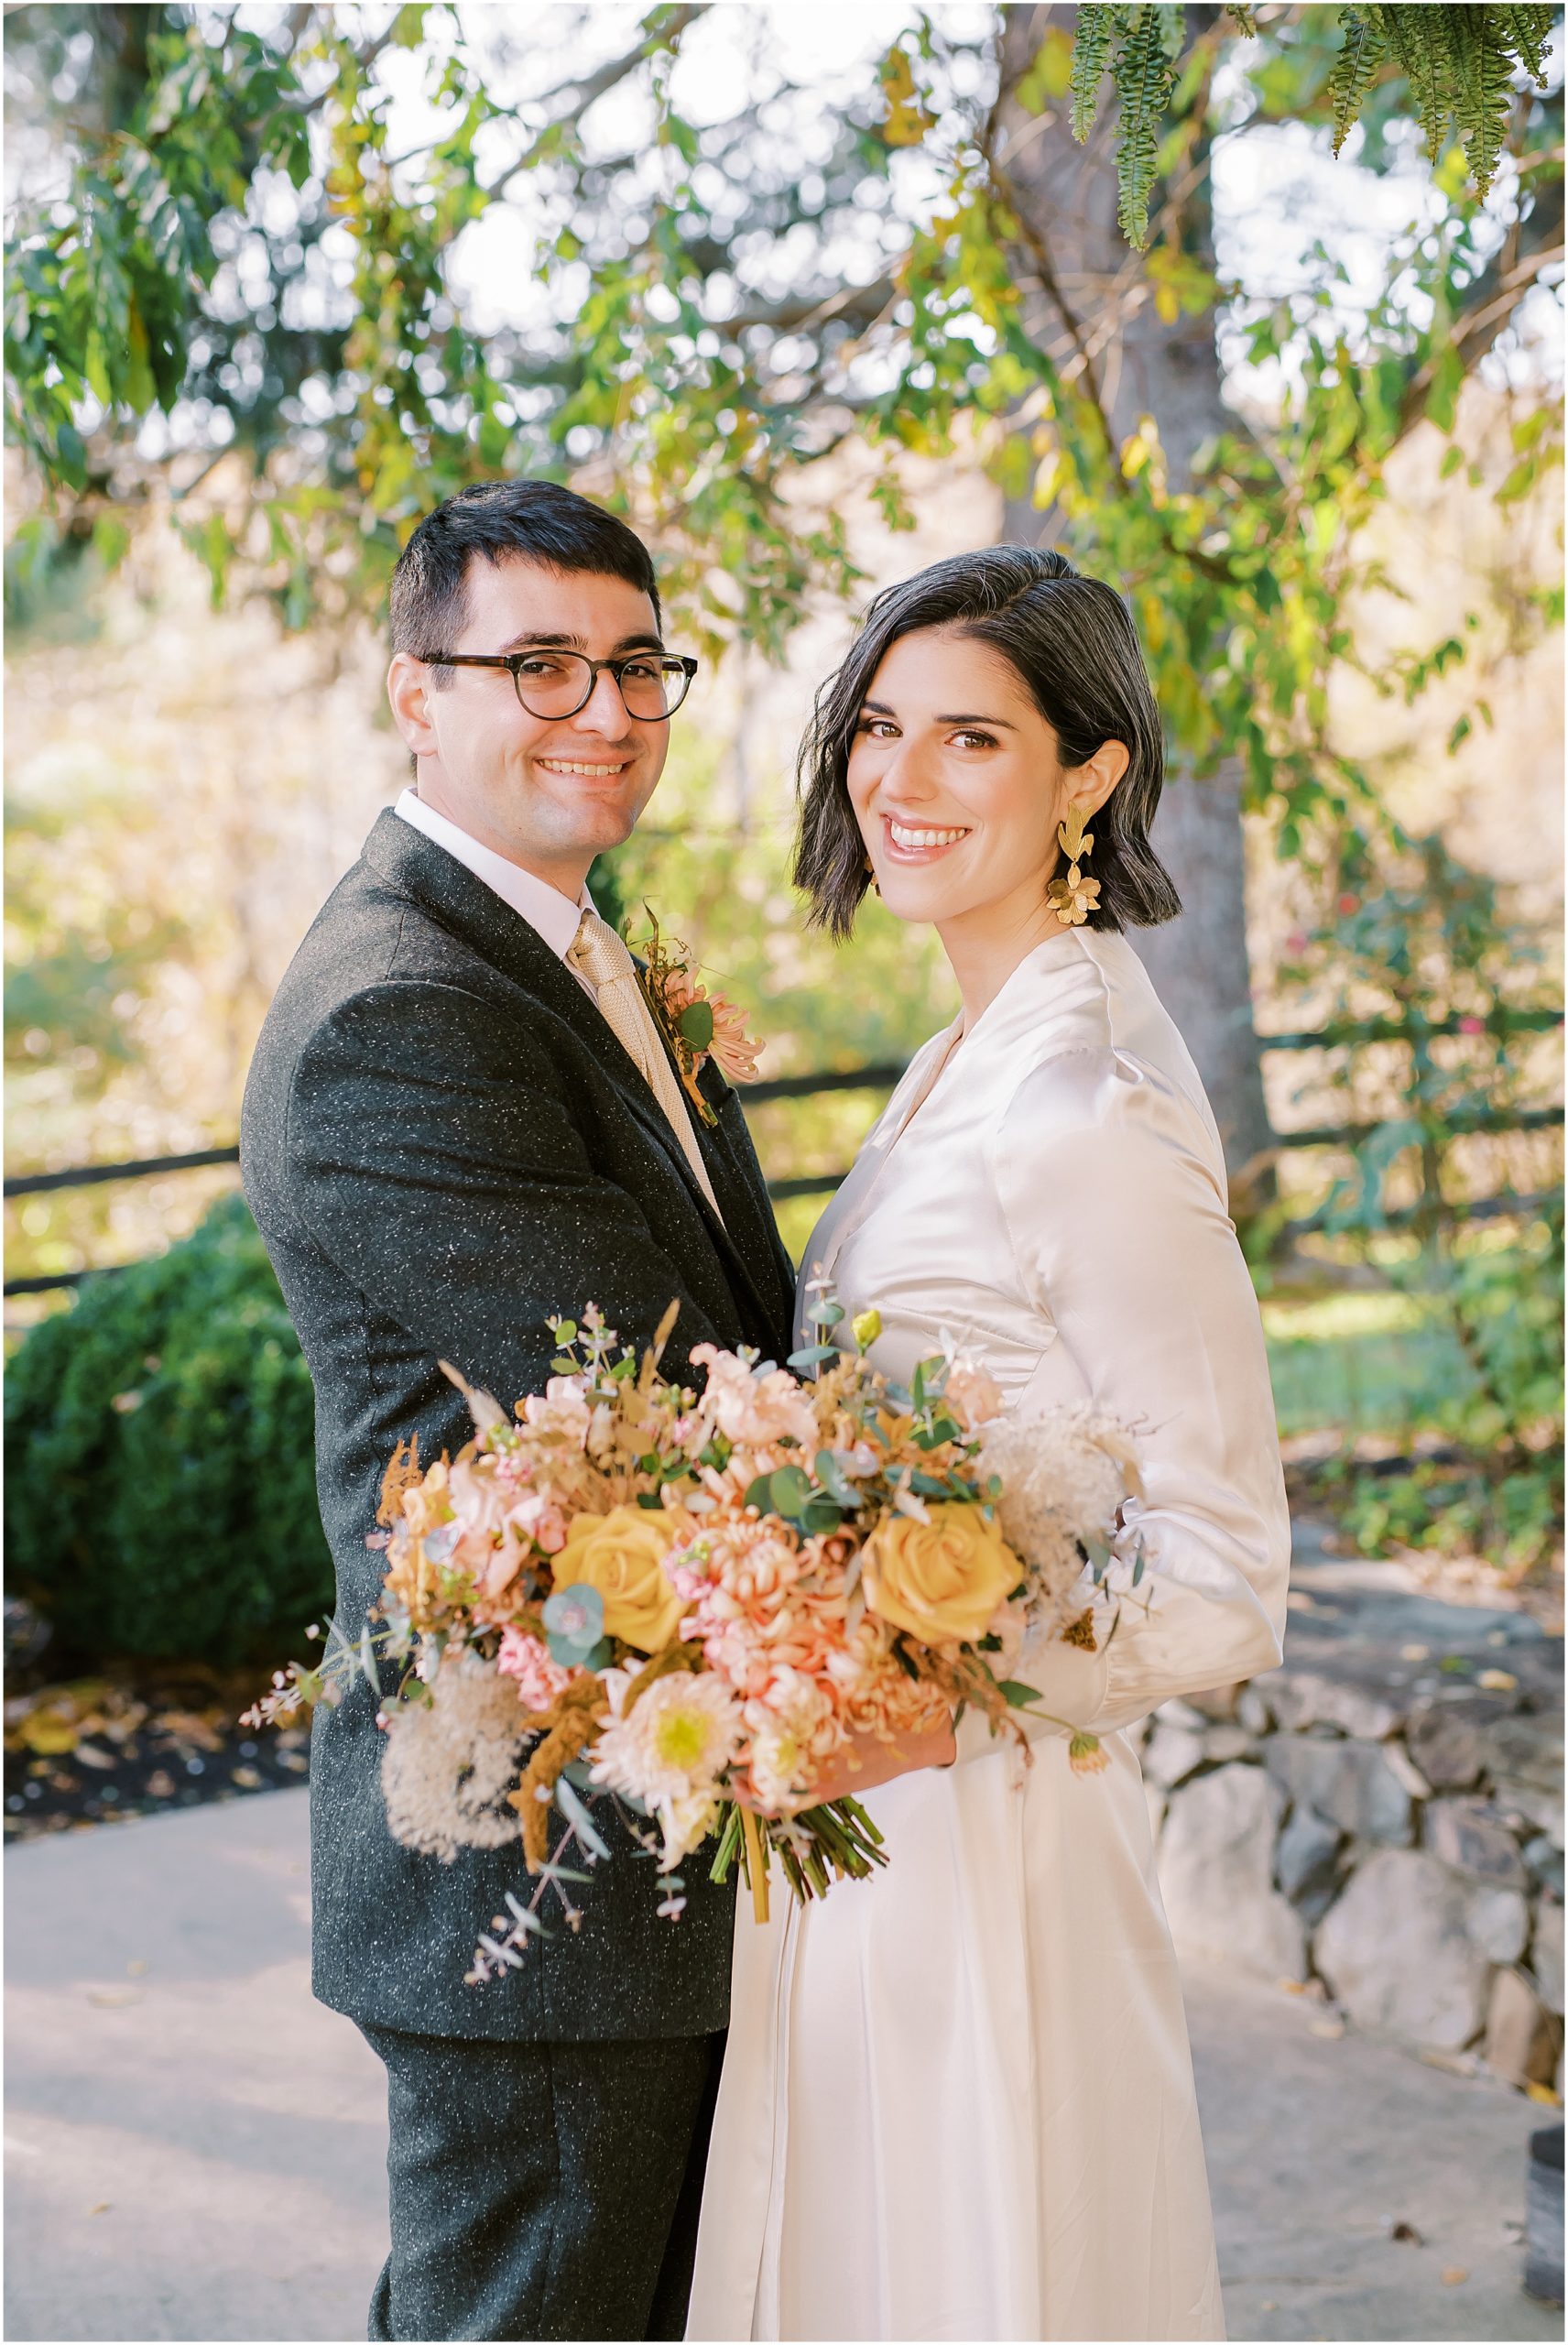 Wedding couple portrait with full bouquet